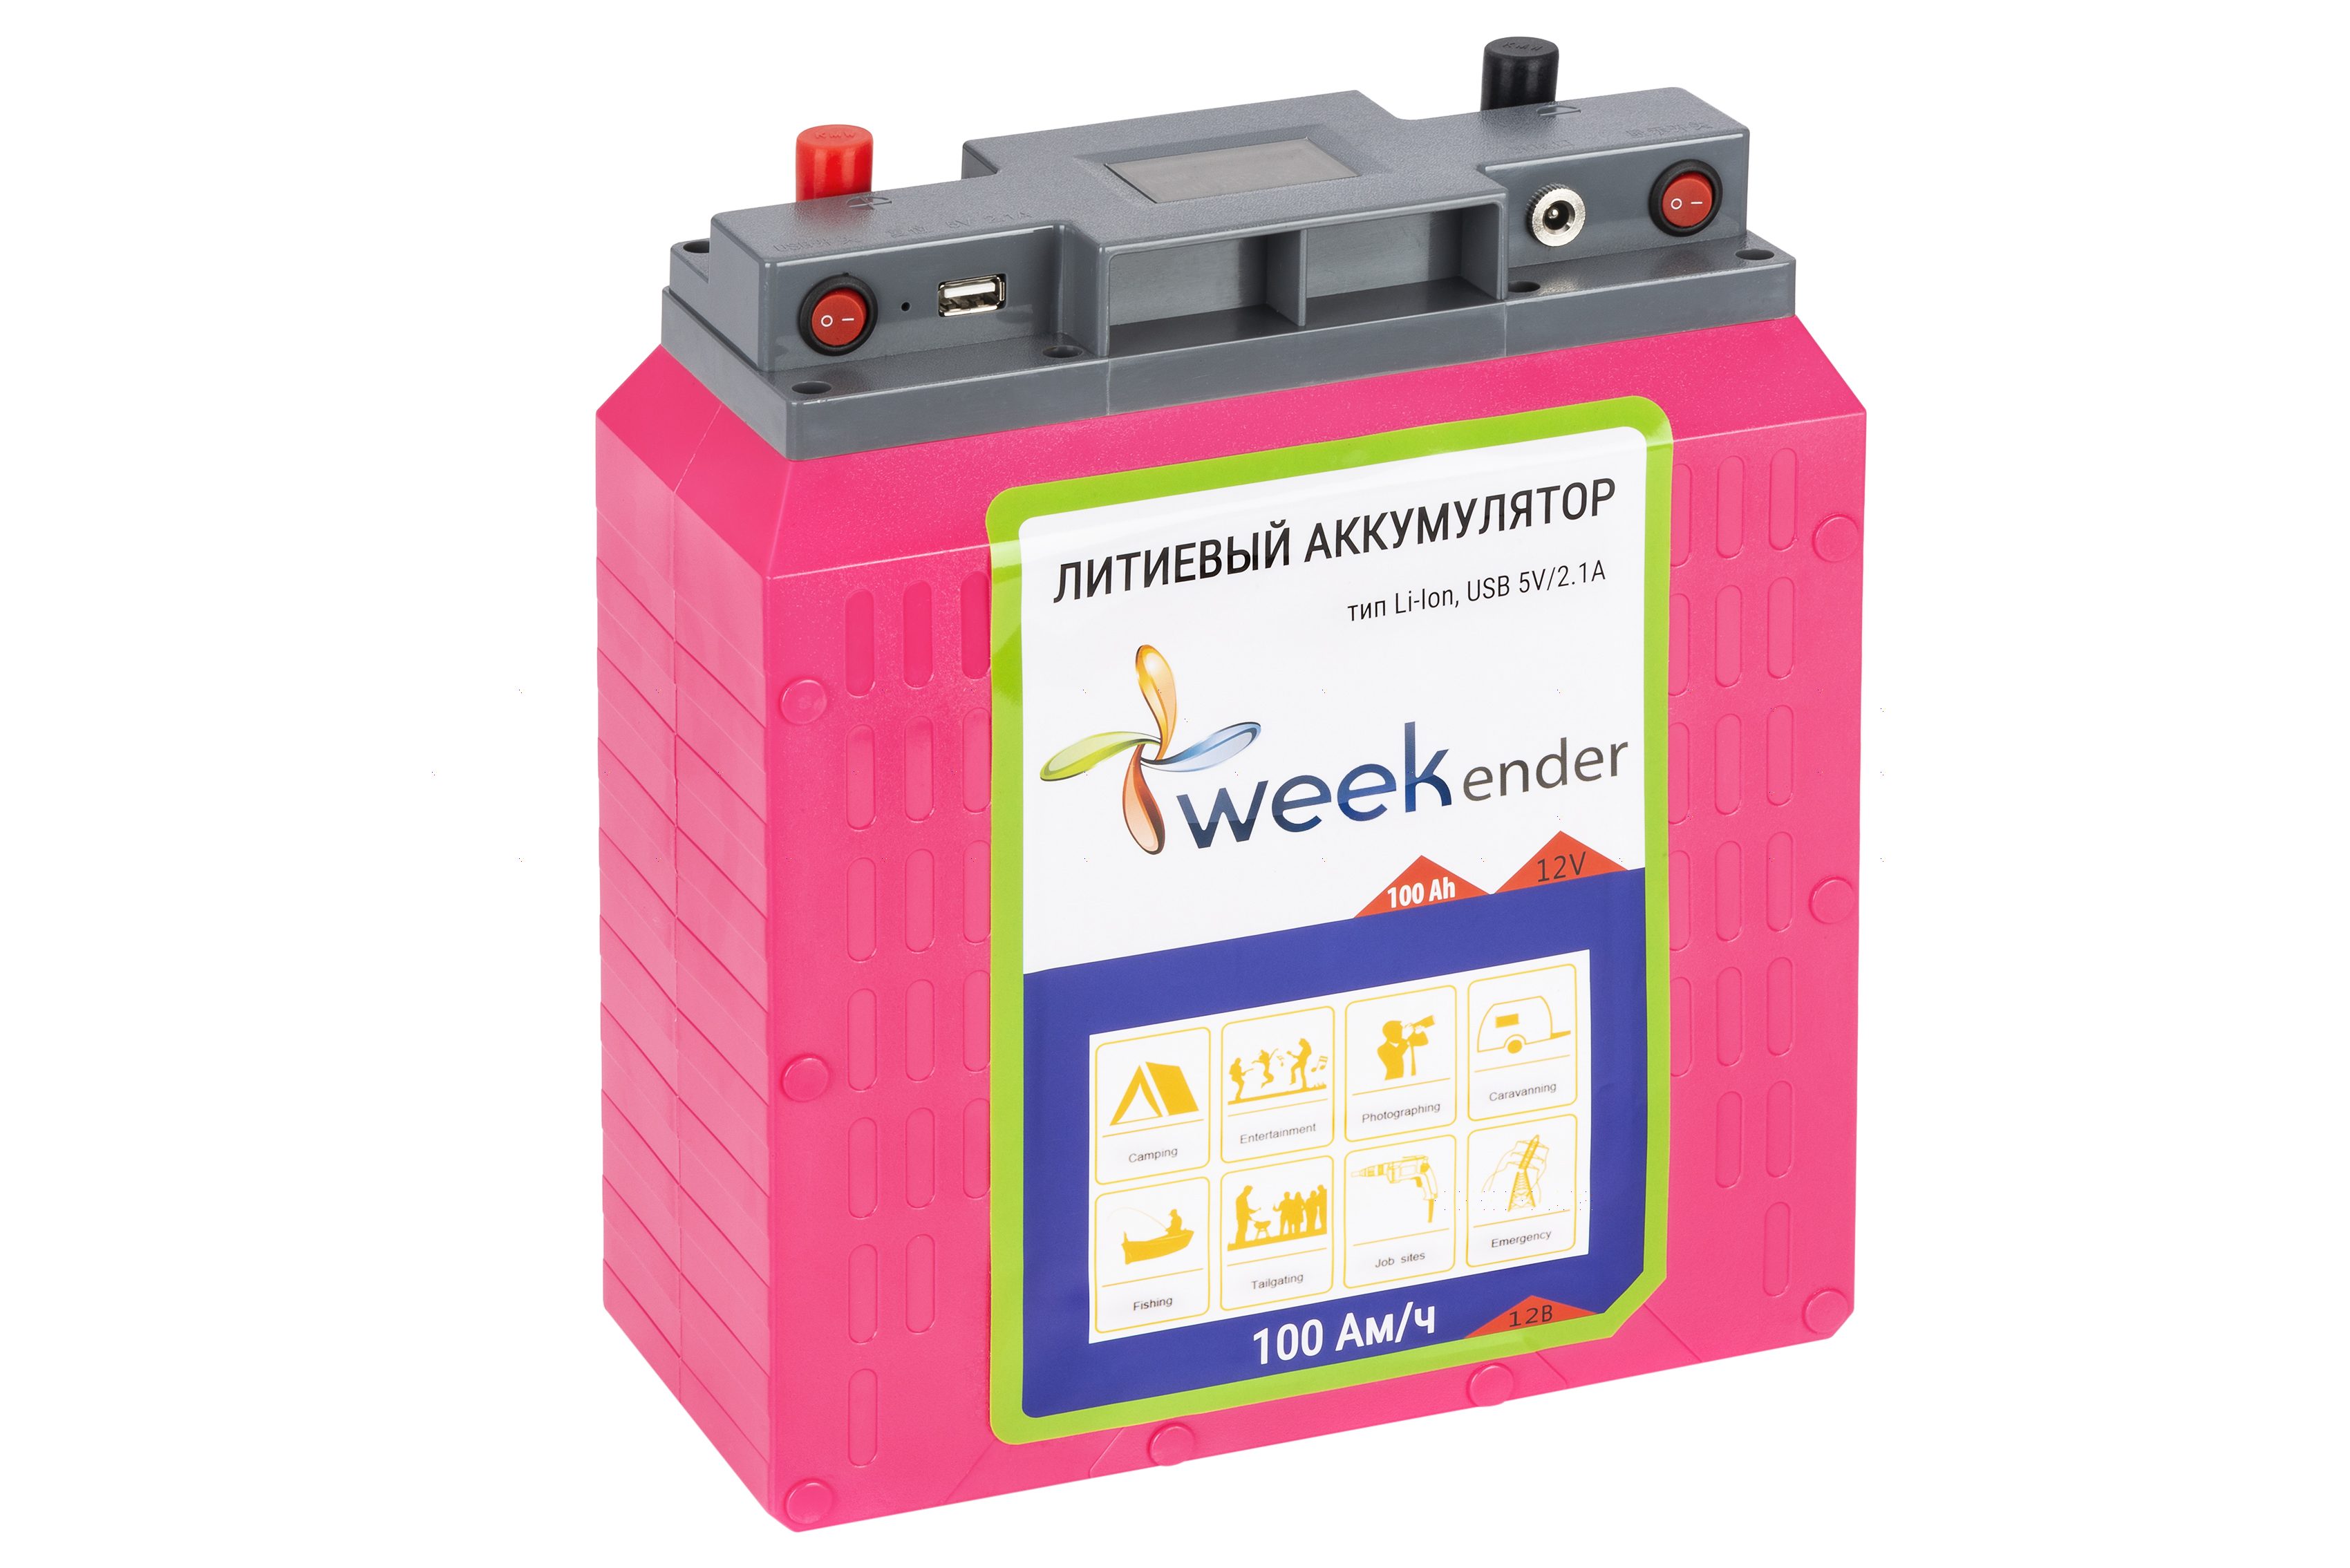  Литий-ионный аккумулятор для лодочного электромотора Weekender .